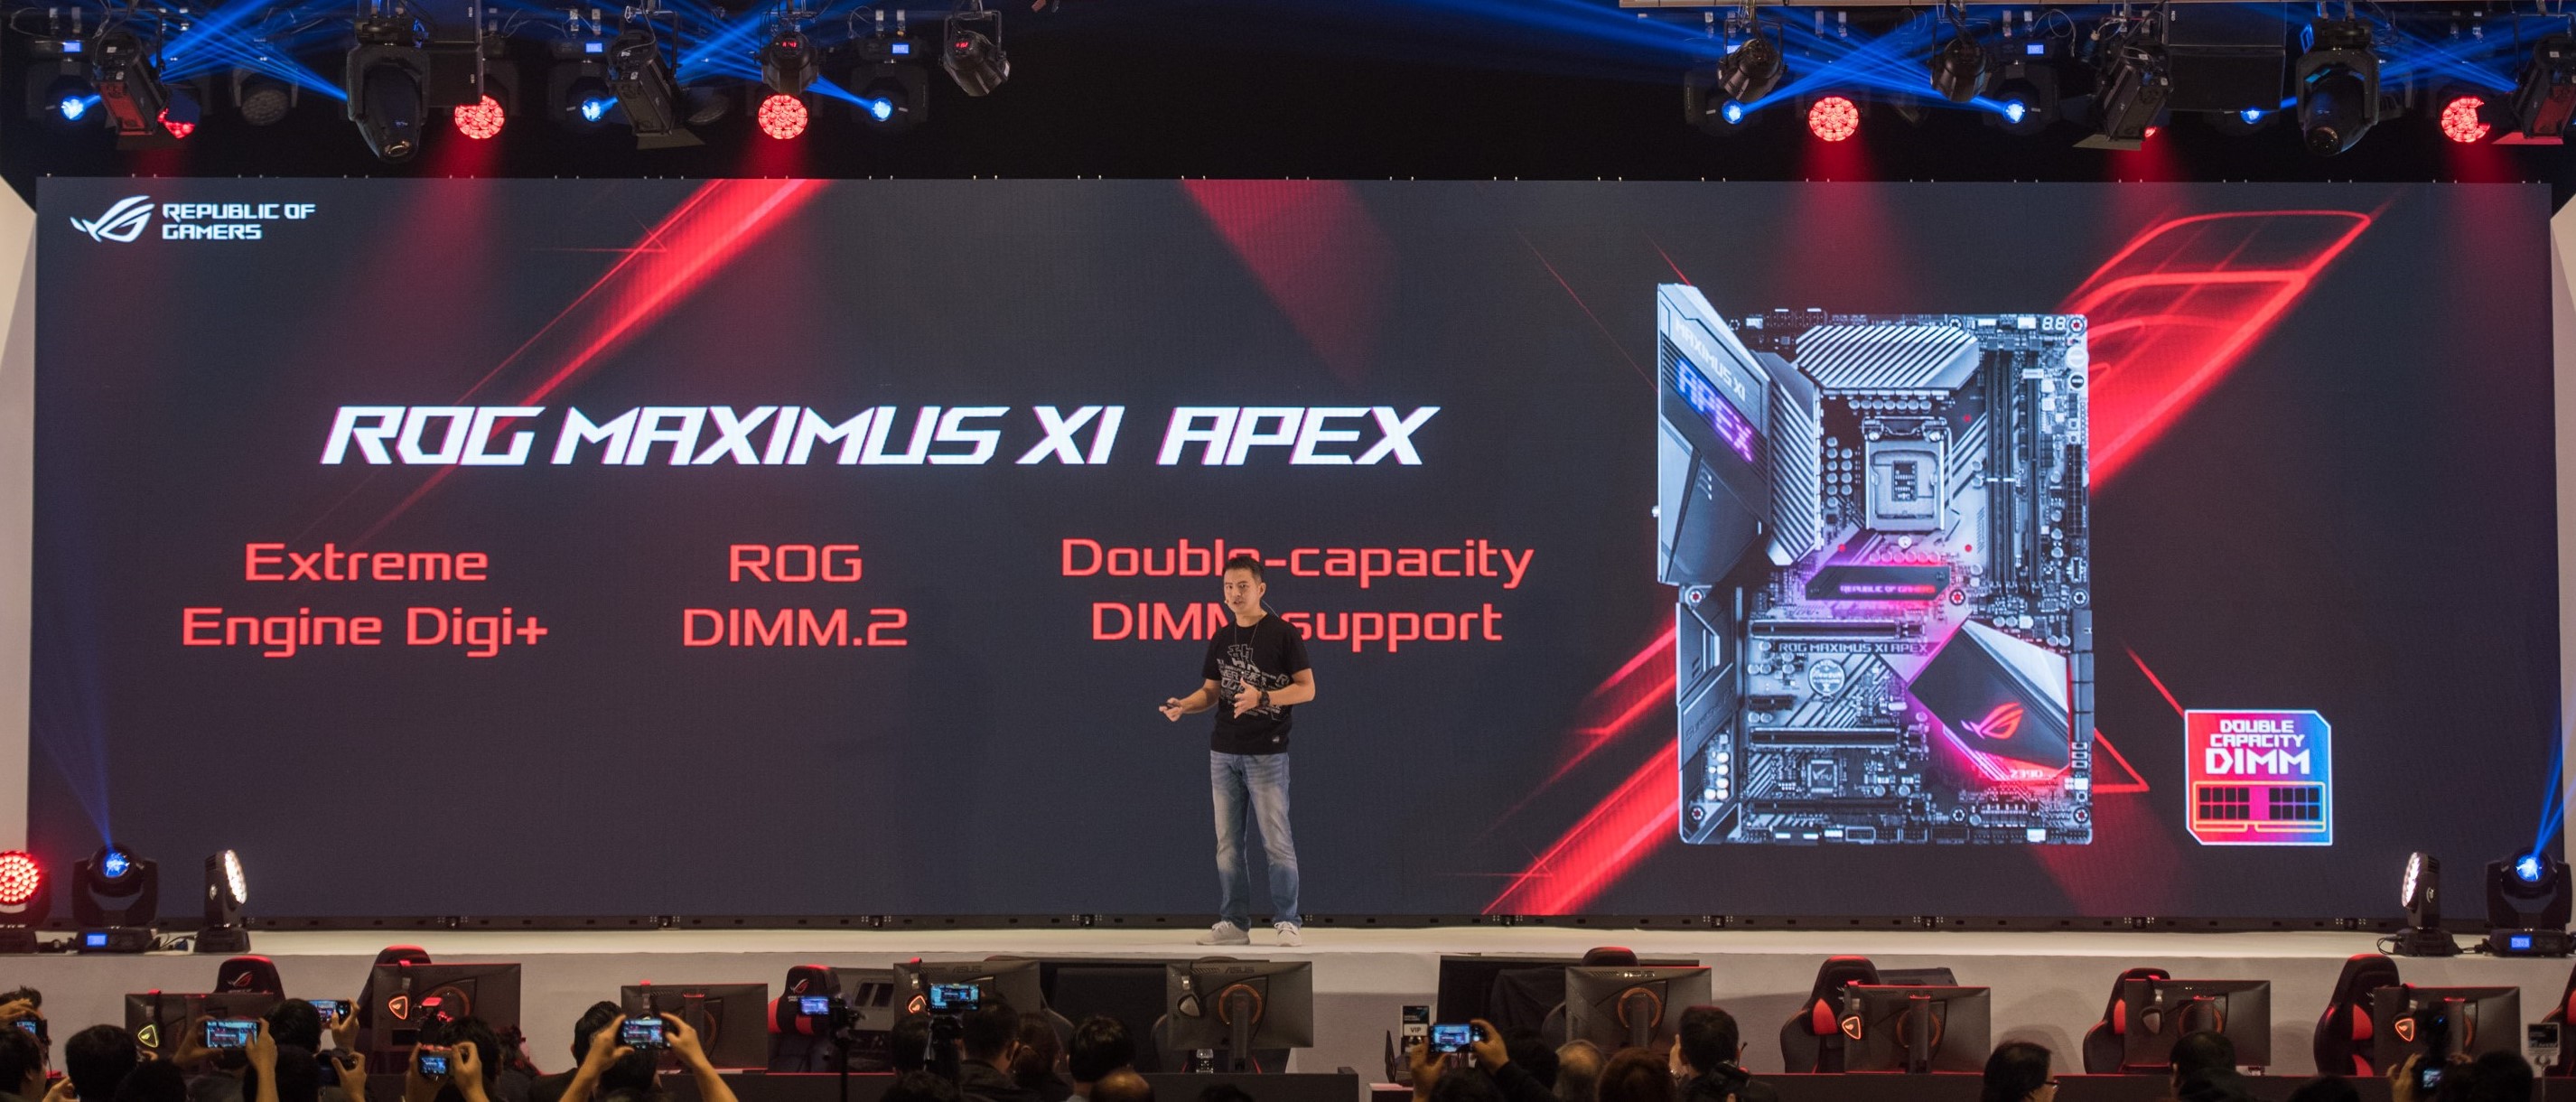 asus general manager of gaming gear and accessory business unit kris huang unveils the brand new rog maximus xi apex motherboard ASUS โชว์นวัตกรรมสินค้าสำหรับการใช้งานในองค์กรธุรกิจ บ้านและการเล่นเกม ที่งาน Incredible Intelligence 2018 ประเทศมาเลเซีย